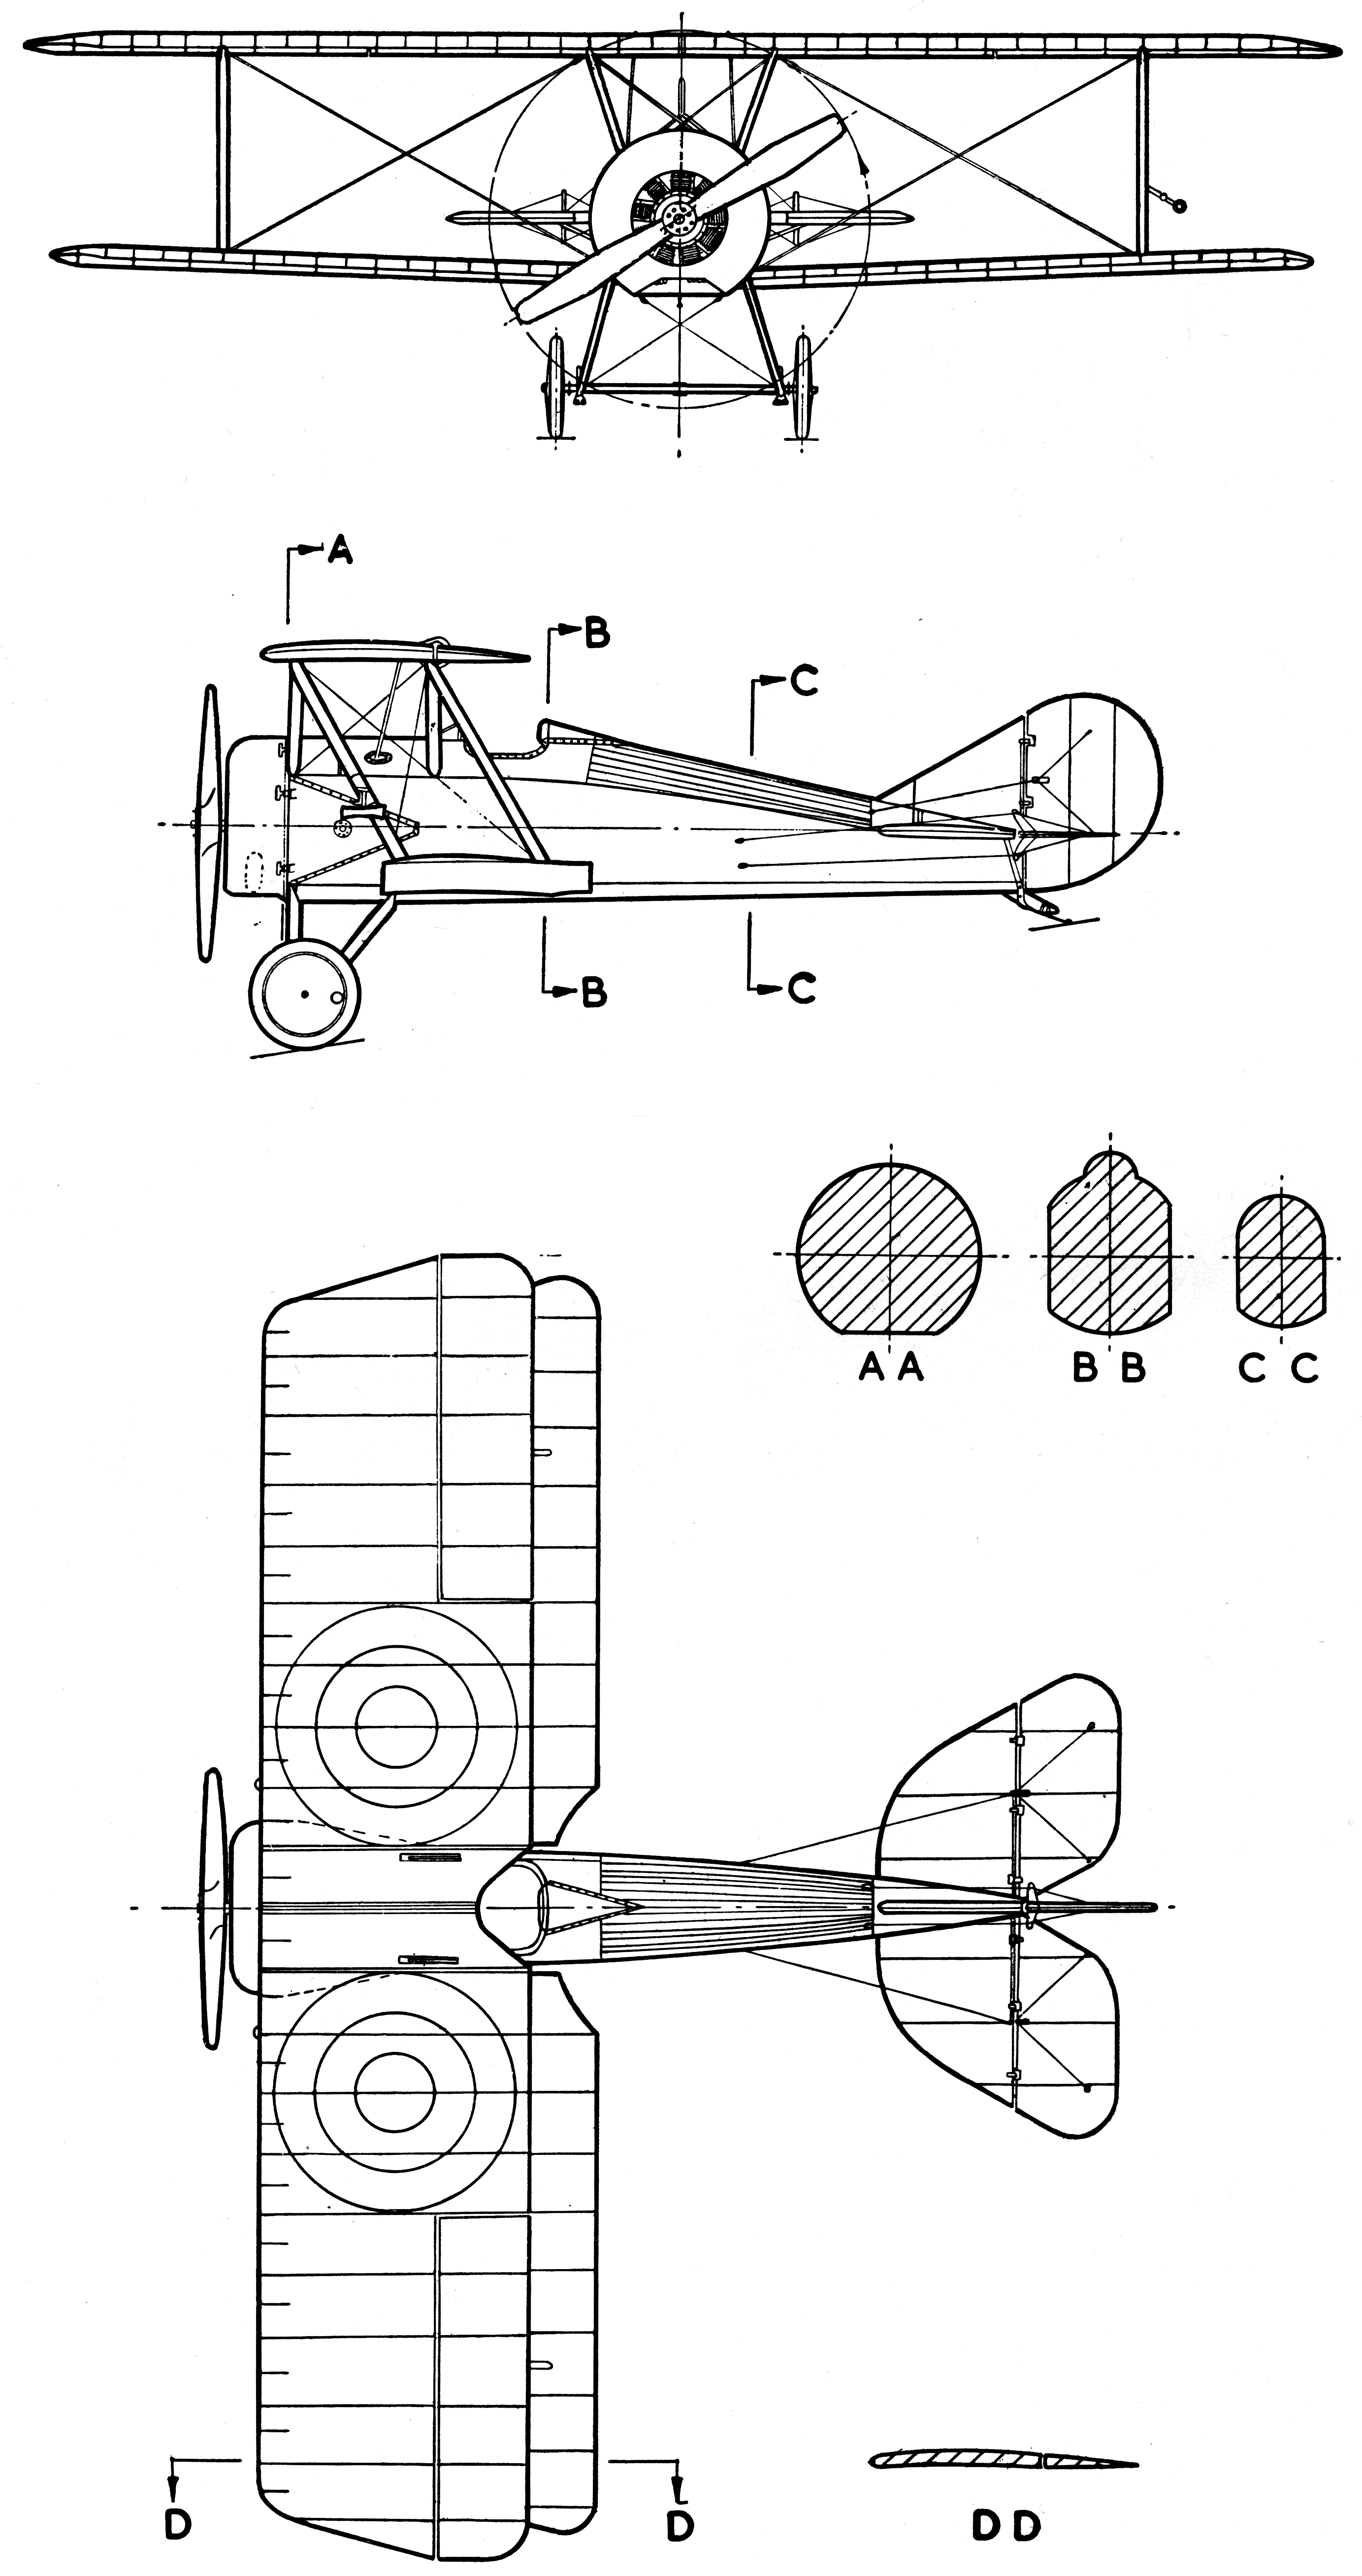 Thomas-Morse S-4 blueprint